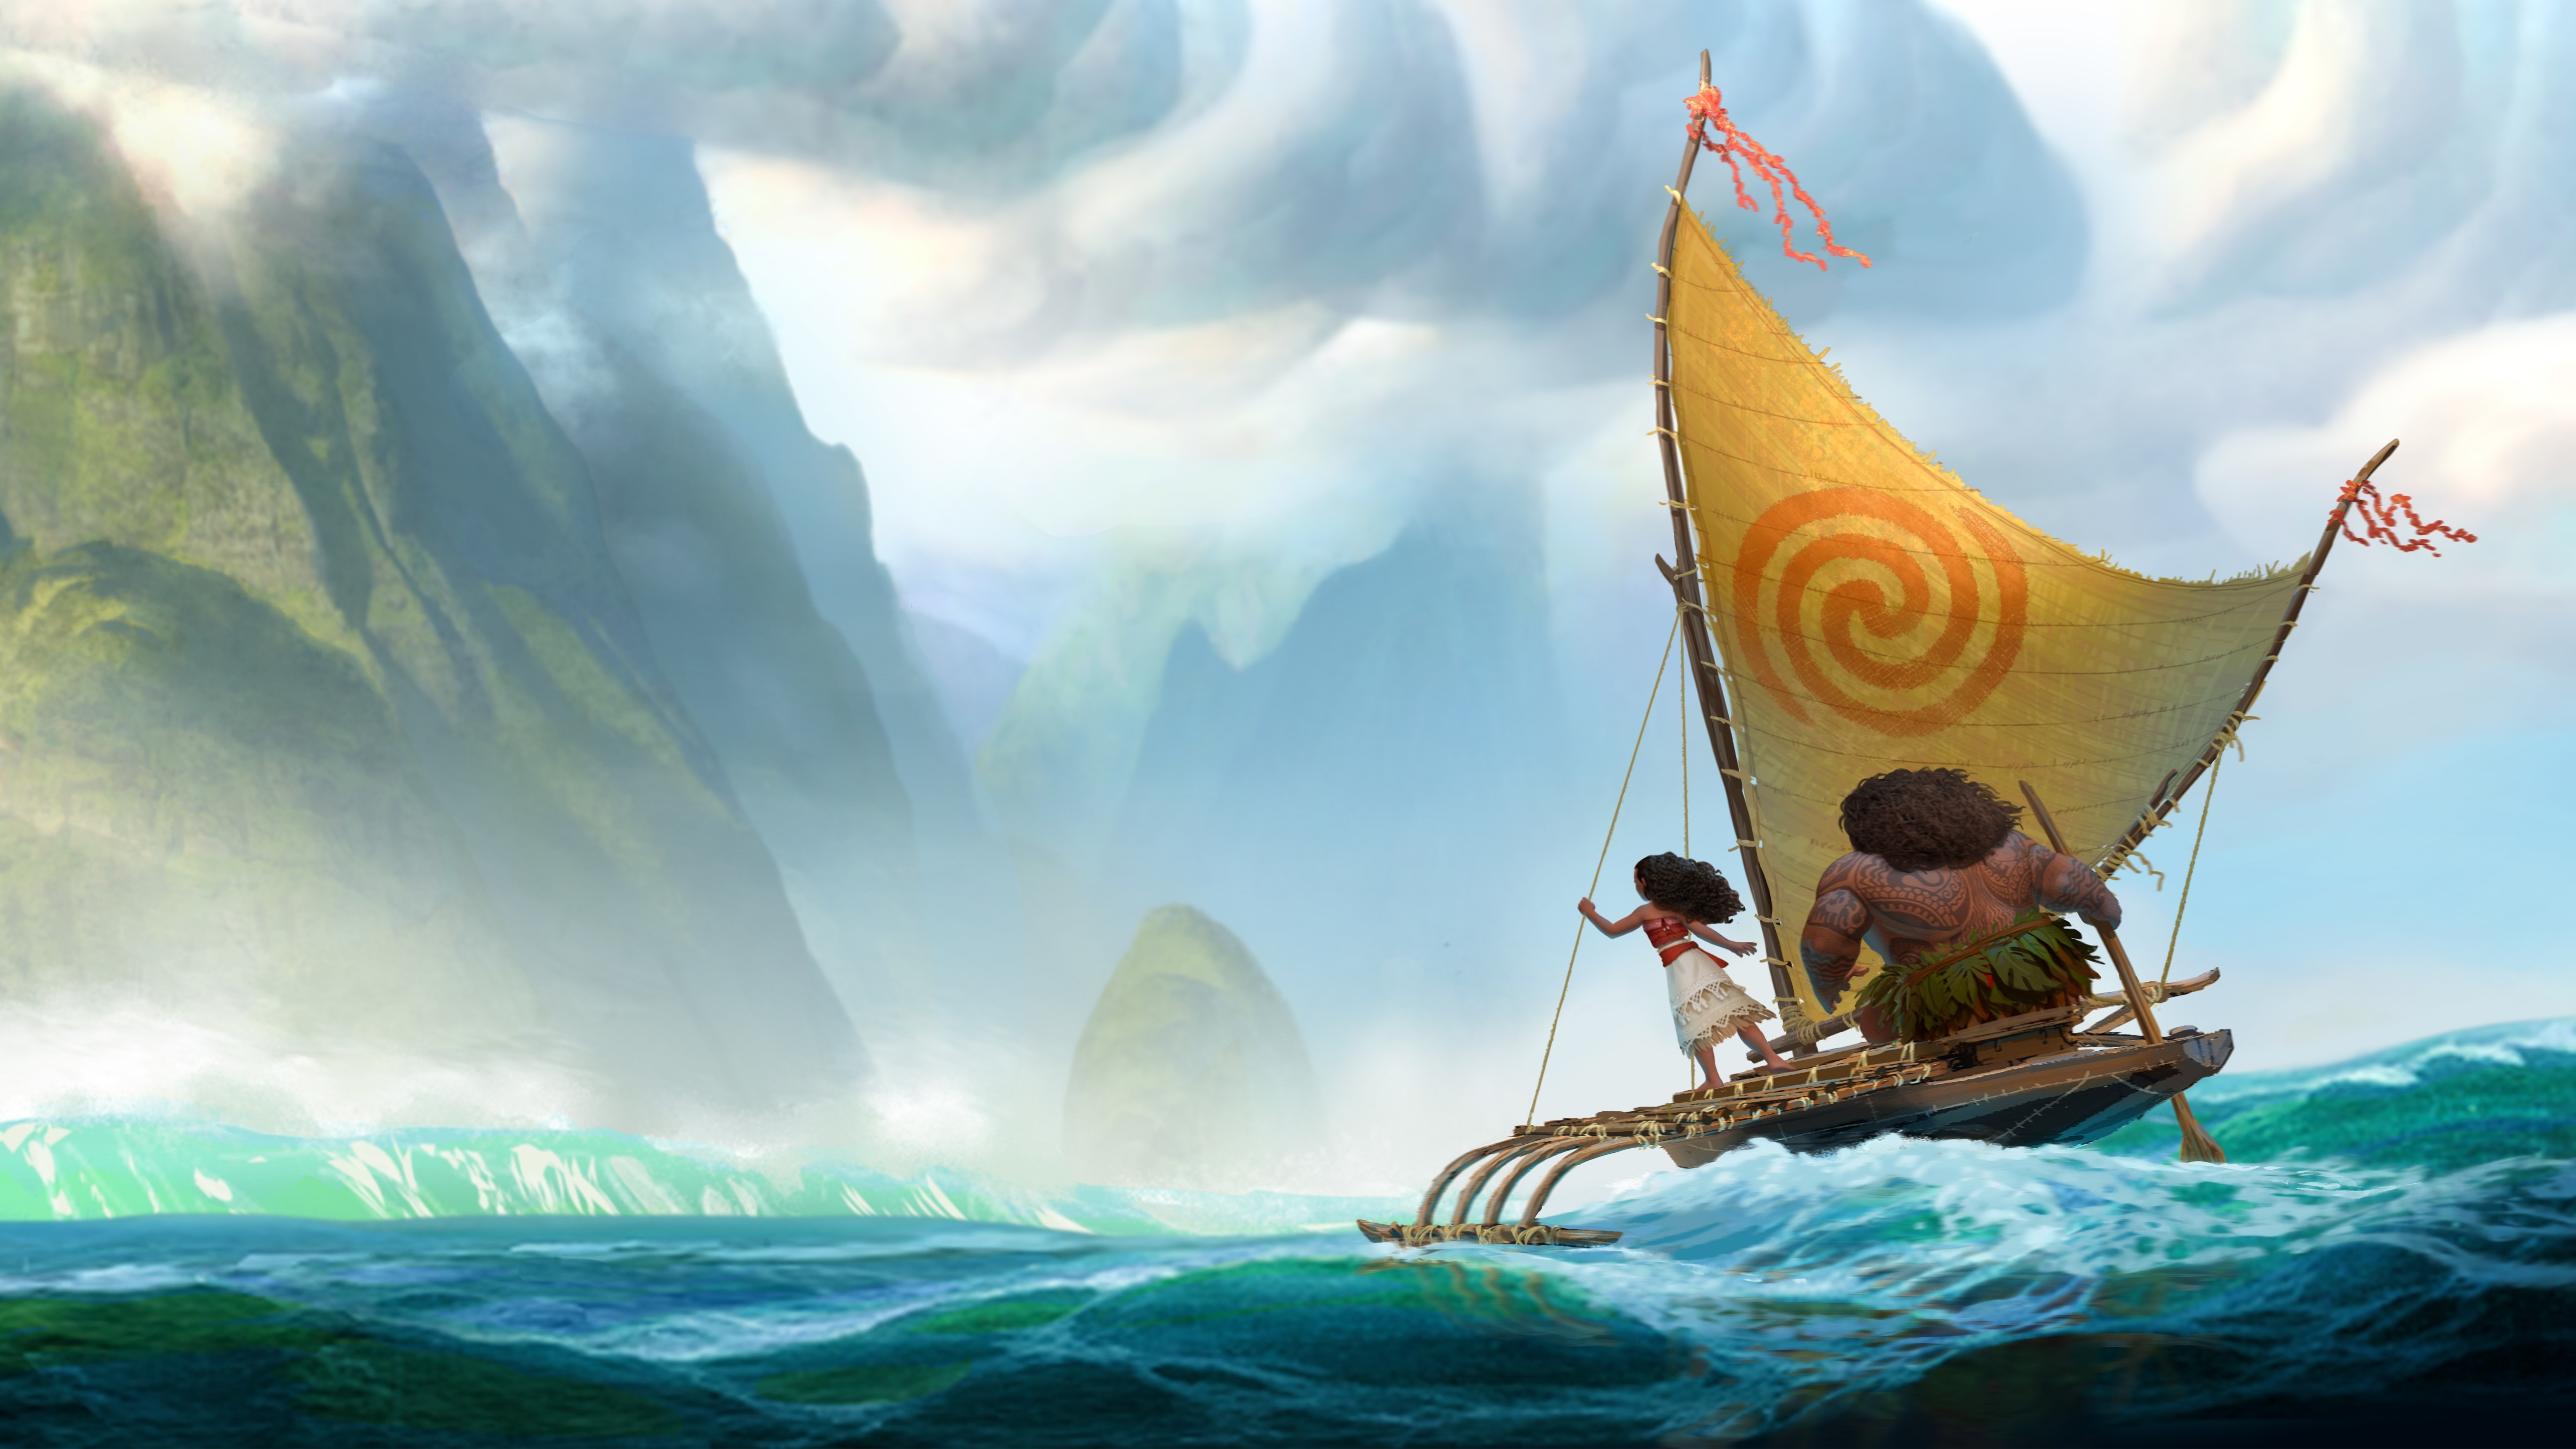 animation movie wallpaper,boat,viking ships,vehicle,sail,watercraft